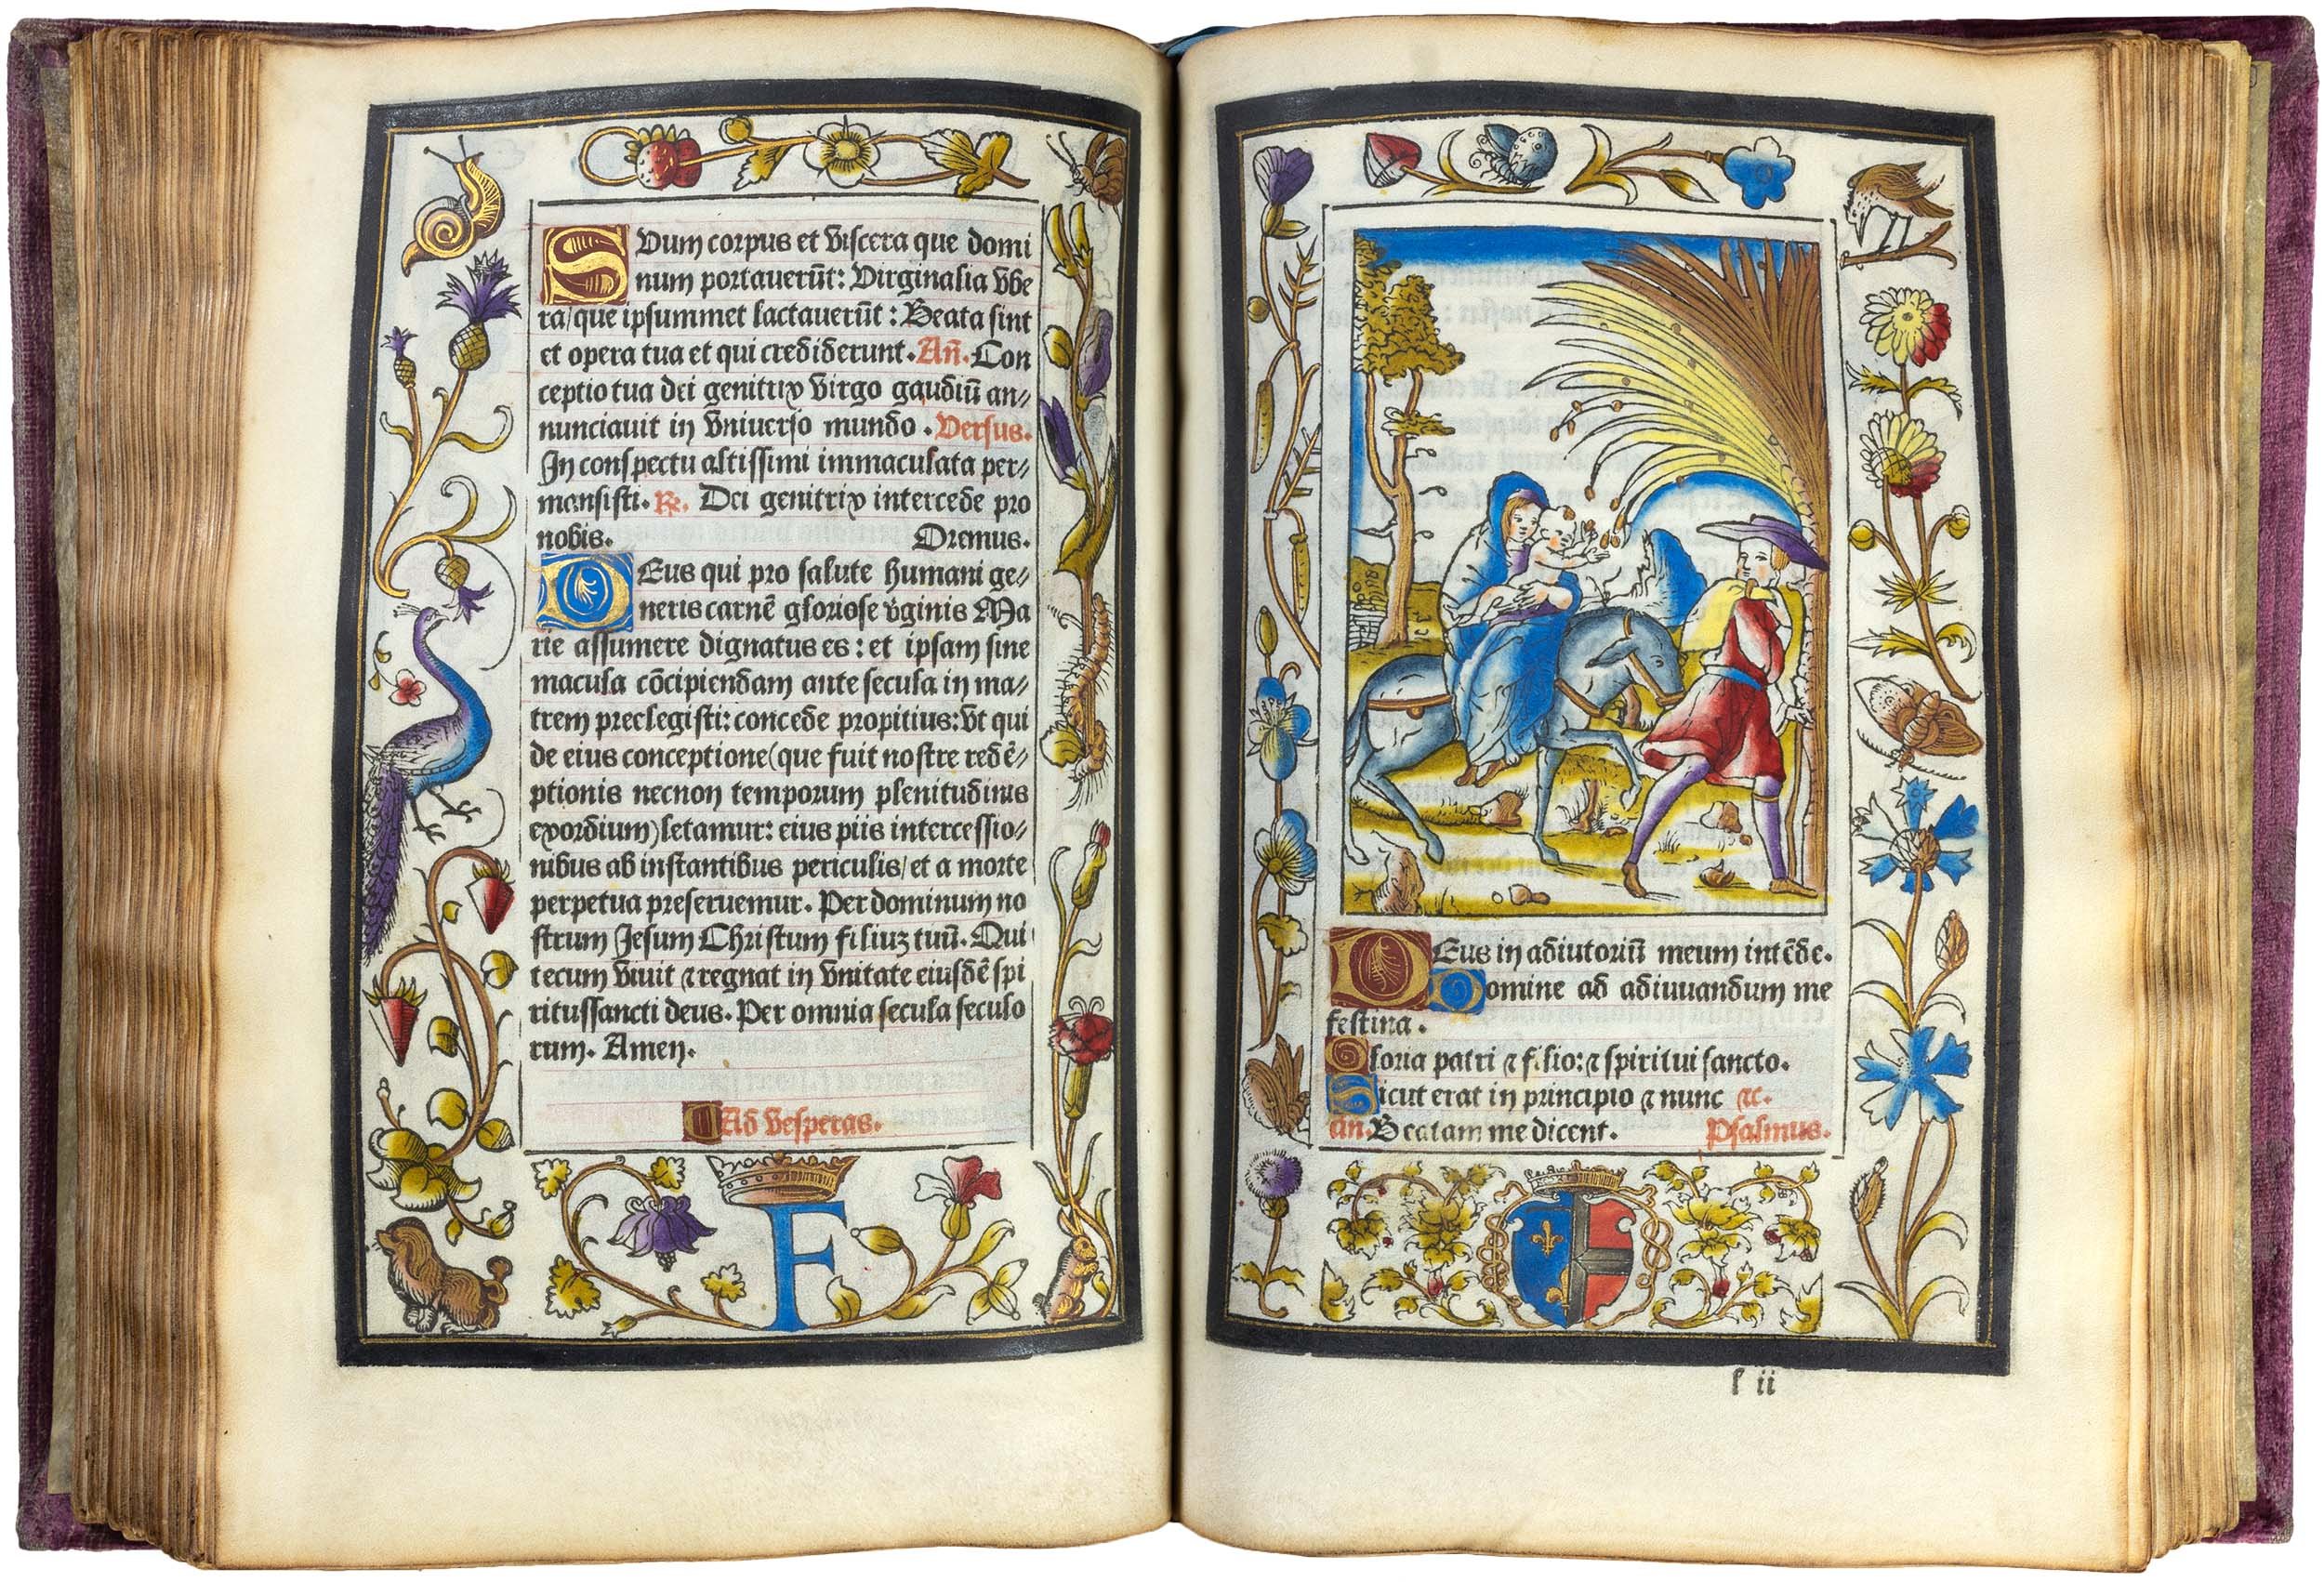 geoffroy-tory-printed-book-of-hours-illuminated-vellum-22-october-1527-prince-dessing-villeneuve-horae-bmv-84.jpg